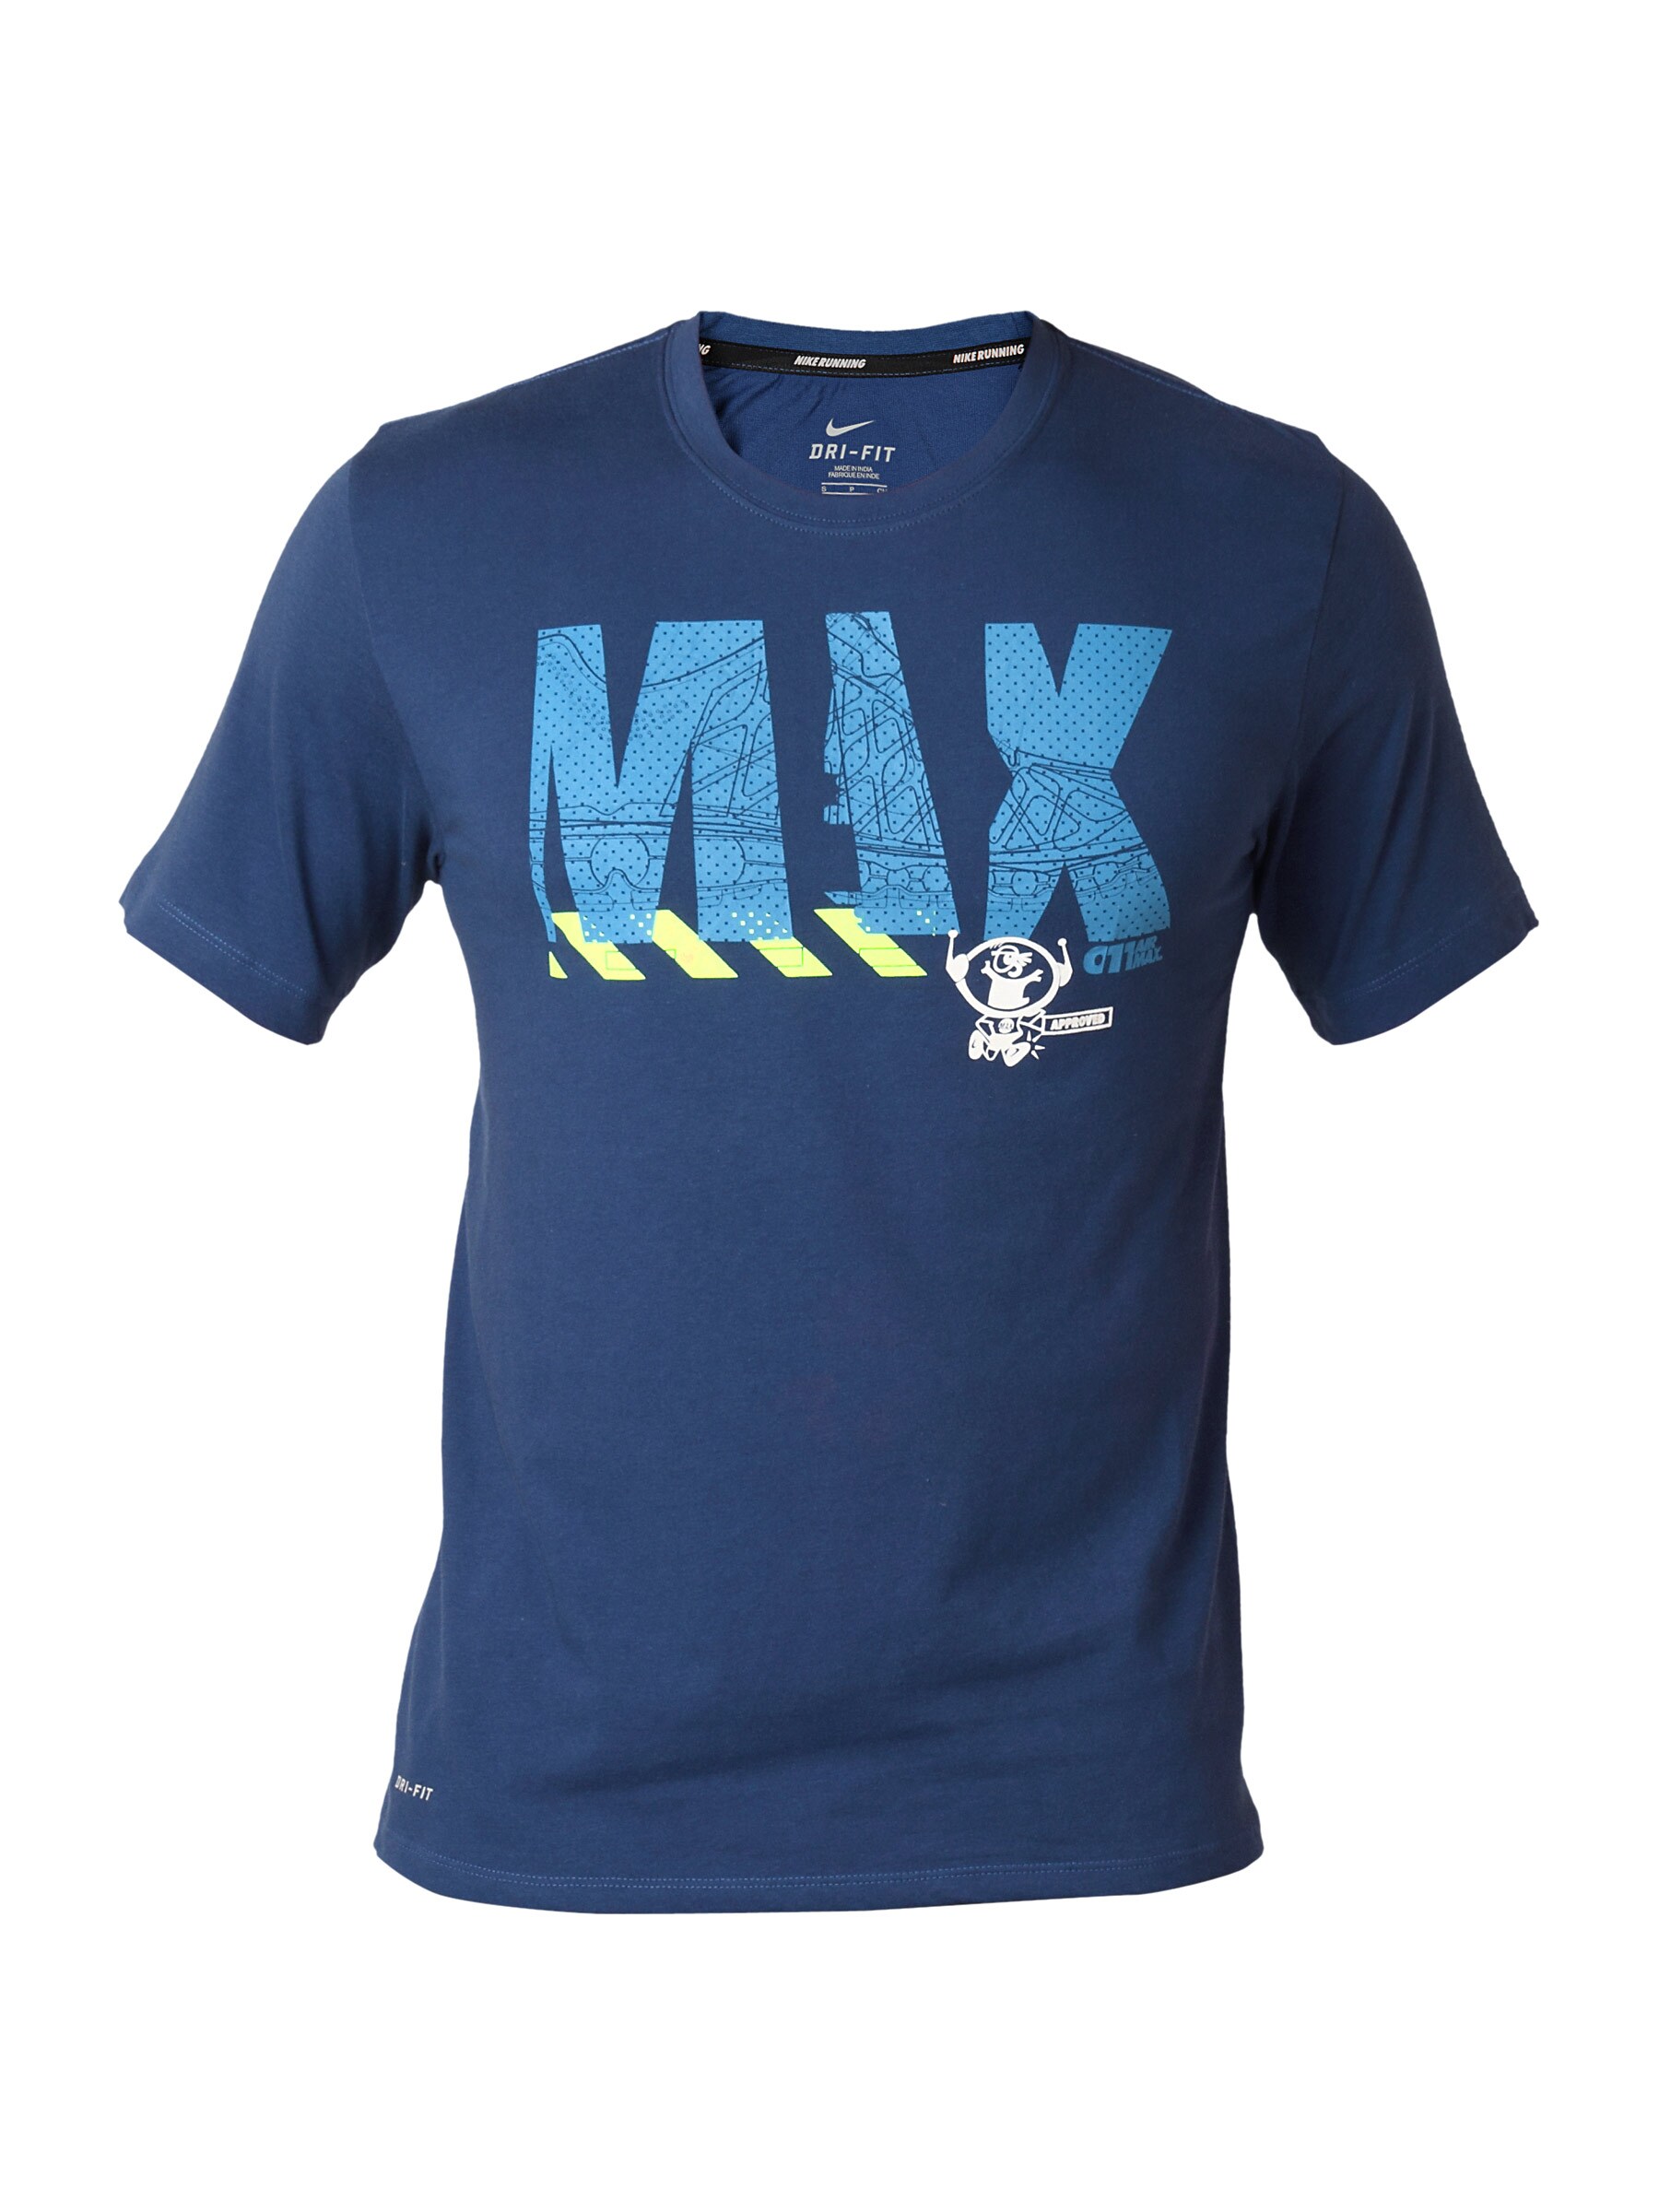 Nike Men Asss Crusier Graphic Blue T-Shirts